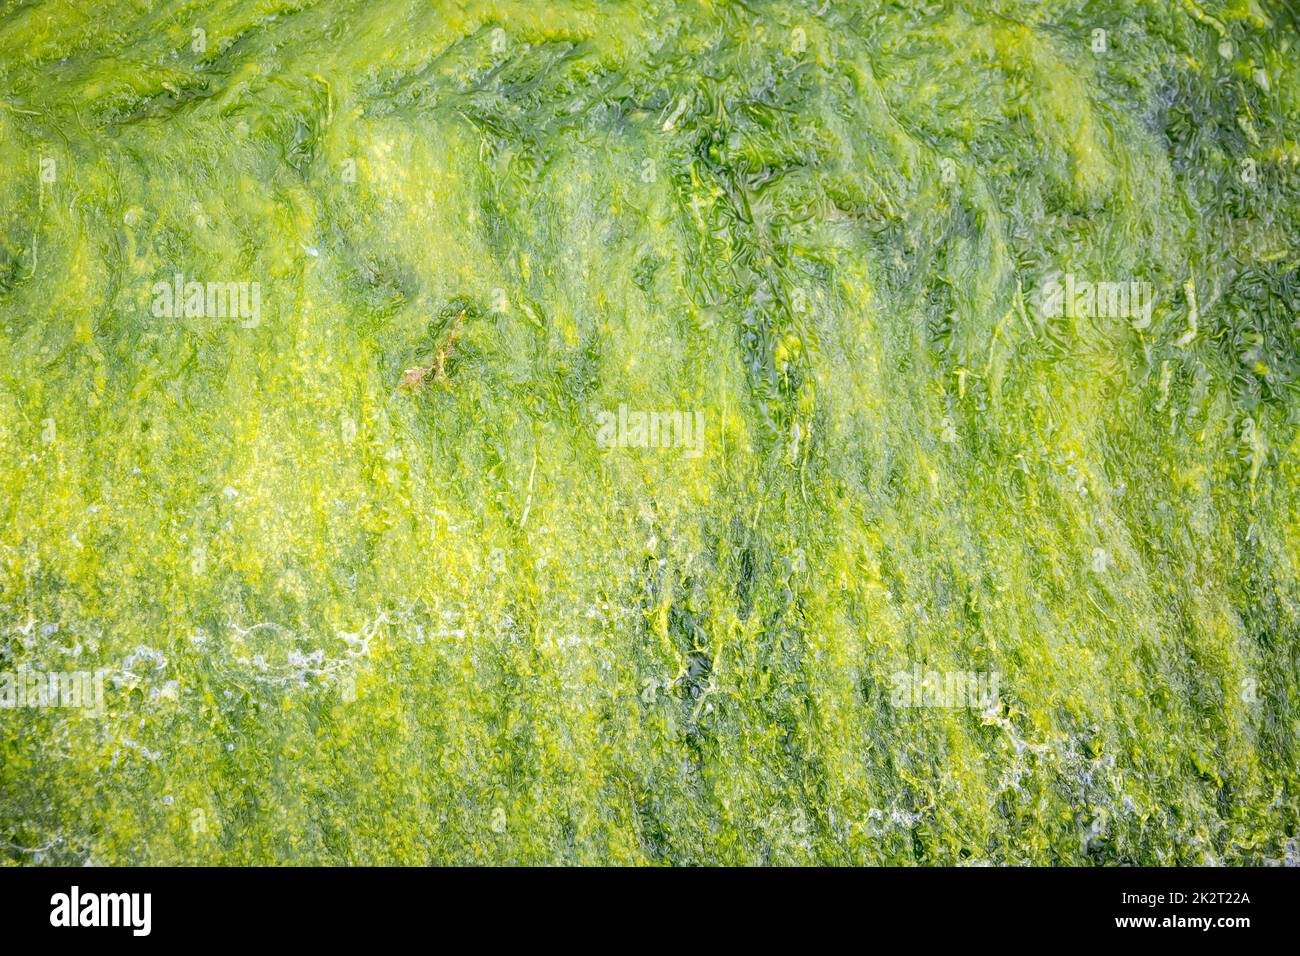 Green Algae close up view Stock Photo